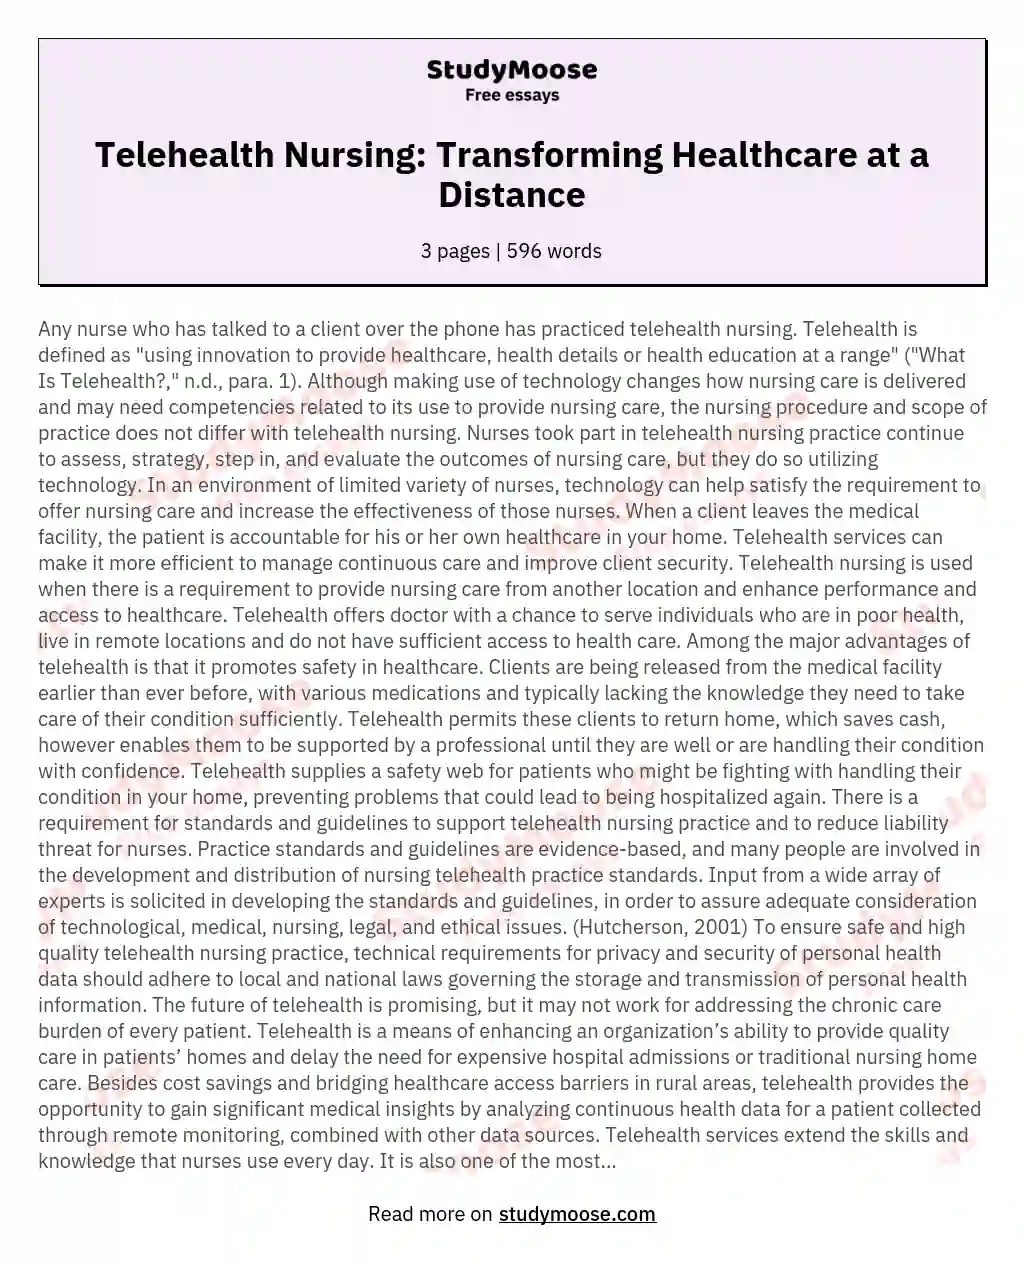 Telehealth Nursing: Transforming Healthcare at a Distance essay